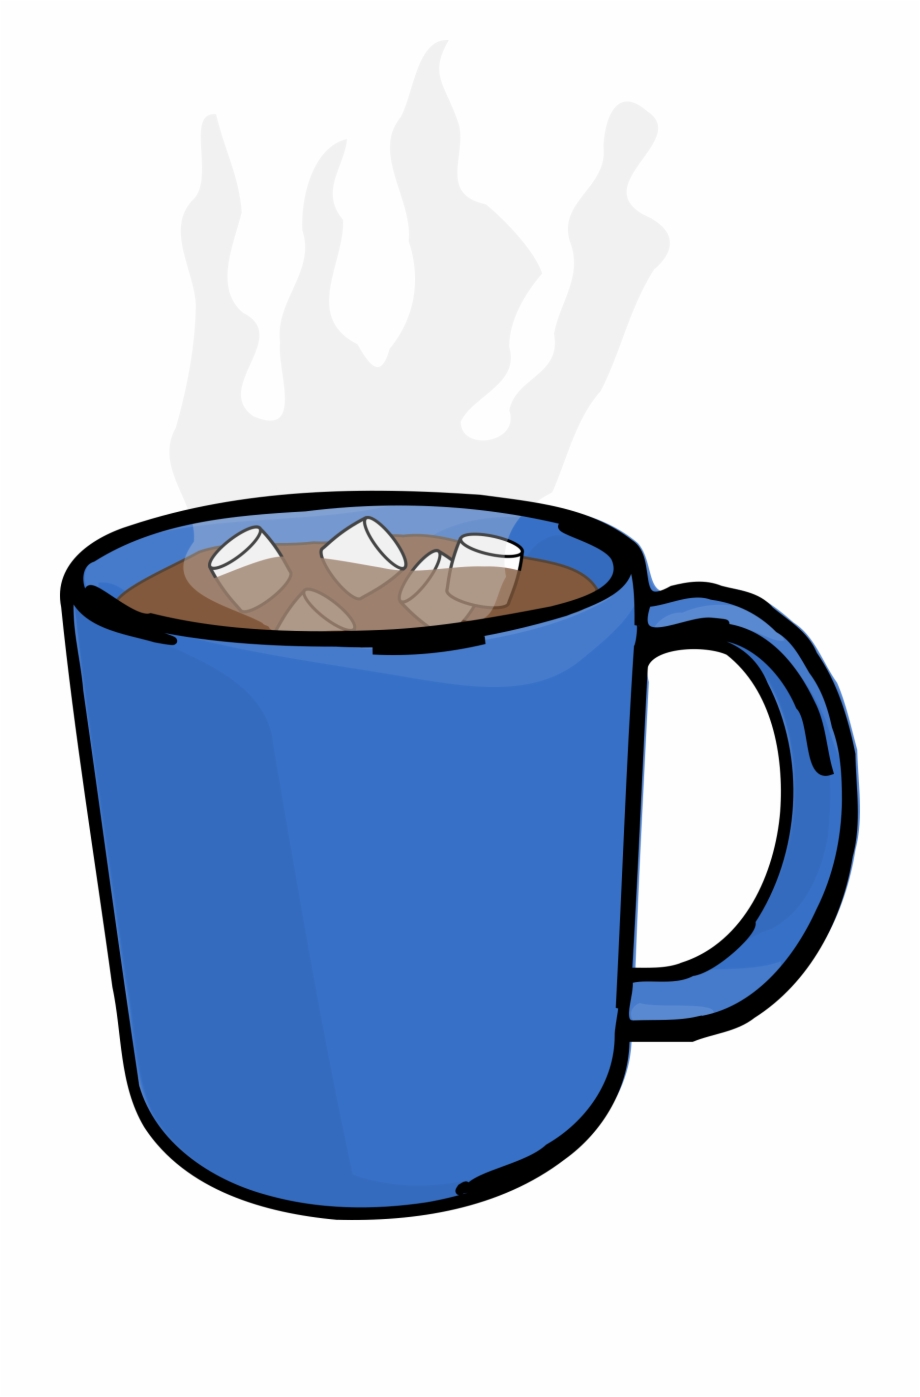 Mug clipart hot chocolate mug, Mug hot chocolate mug Transparent FREE ...